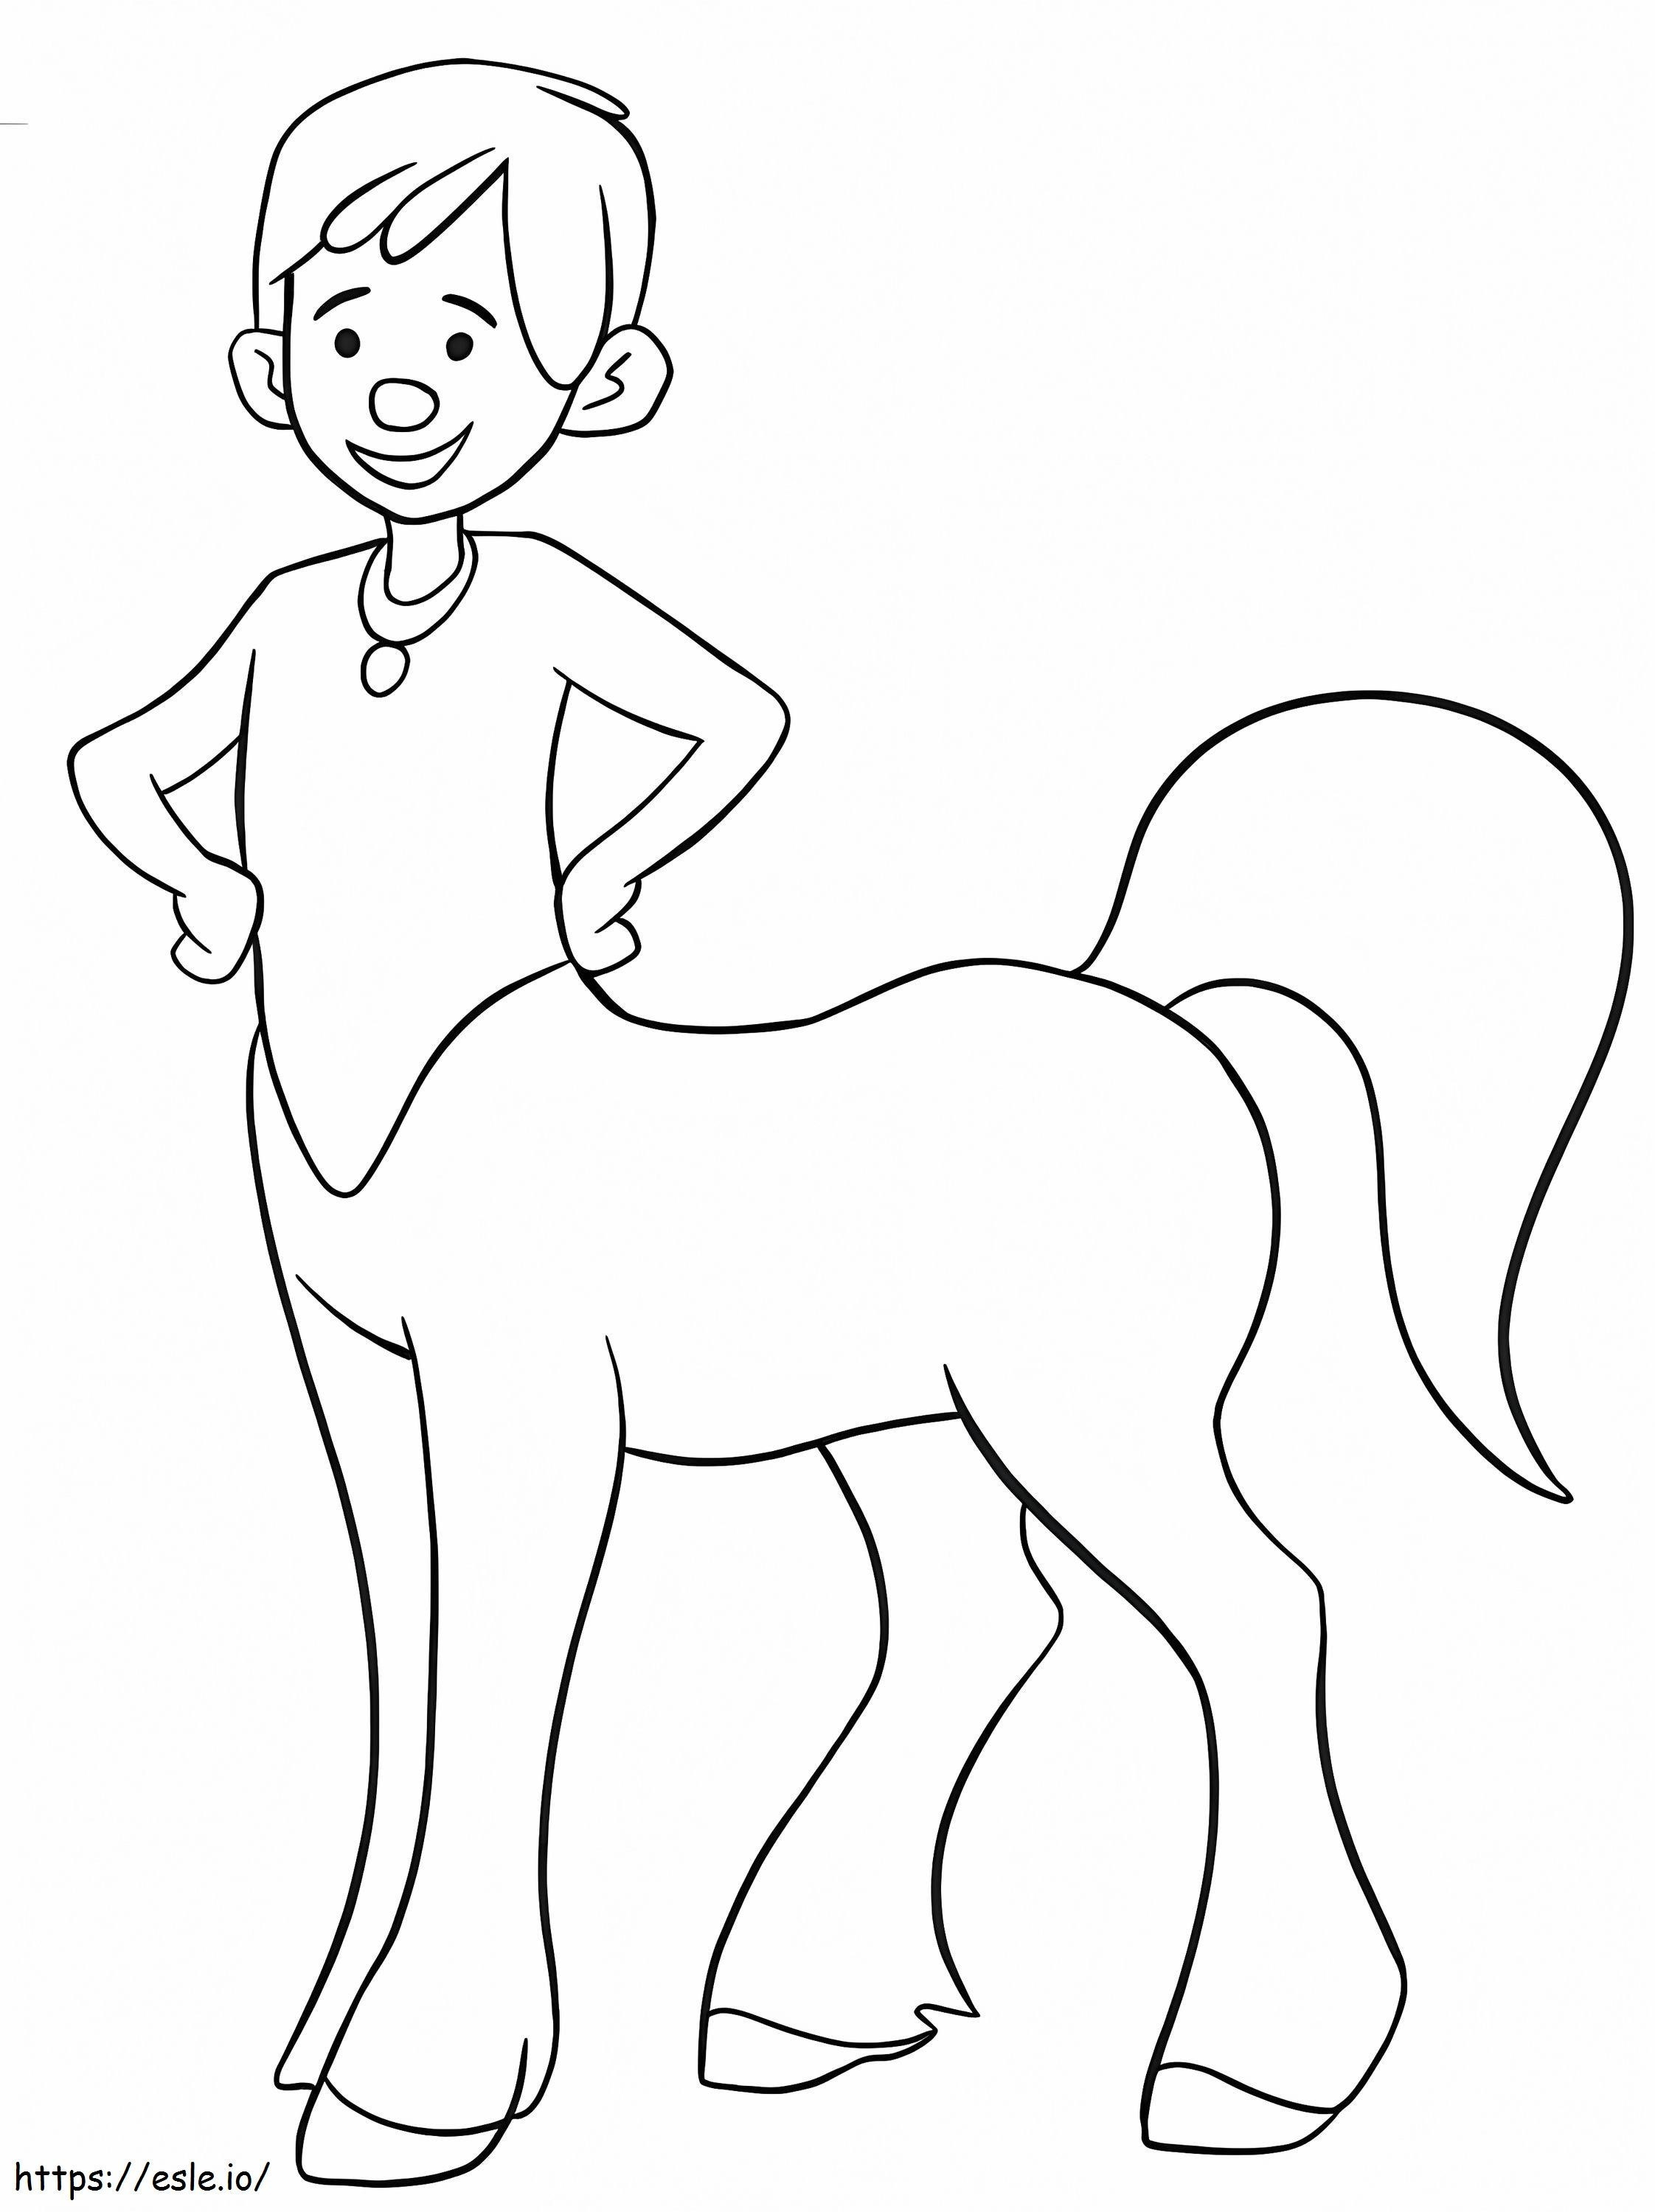 Fun Centaur coloring page